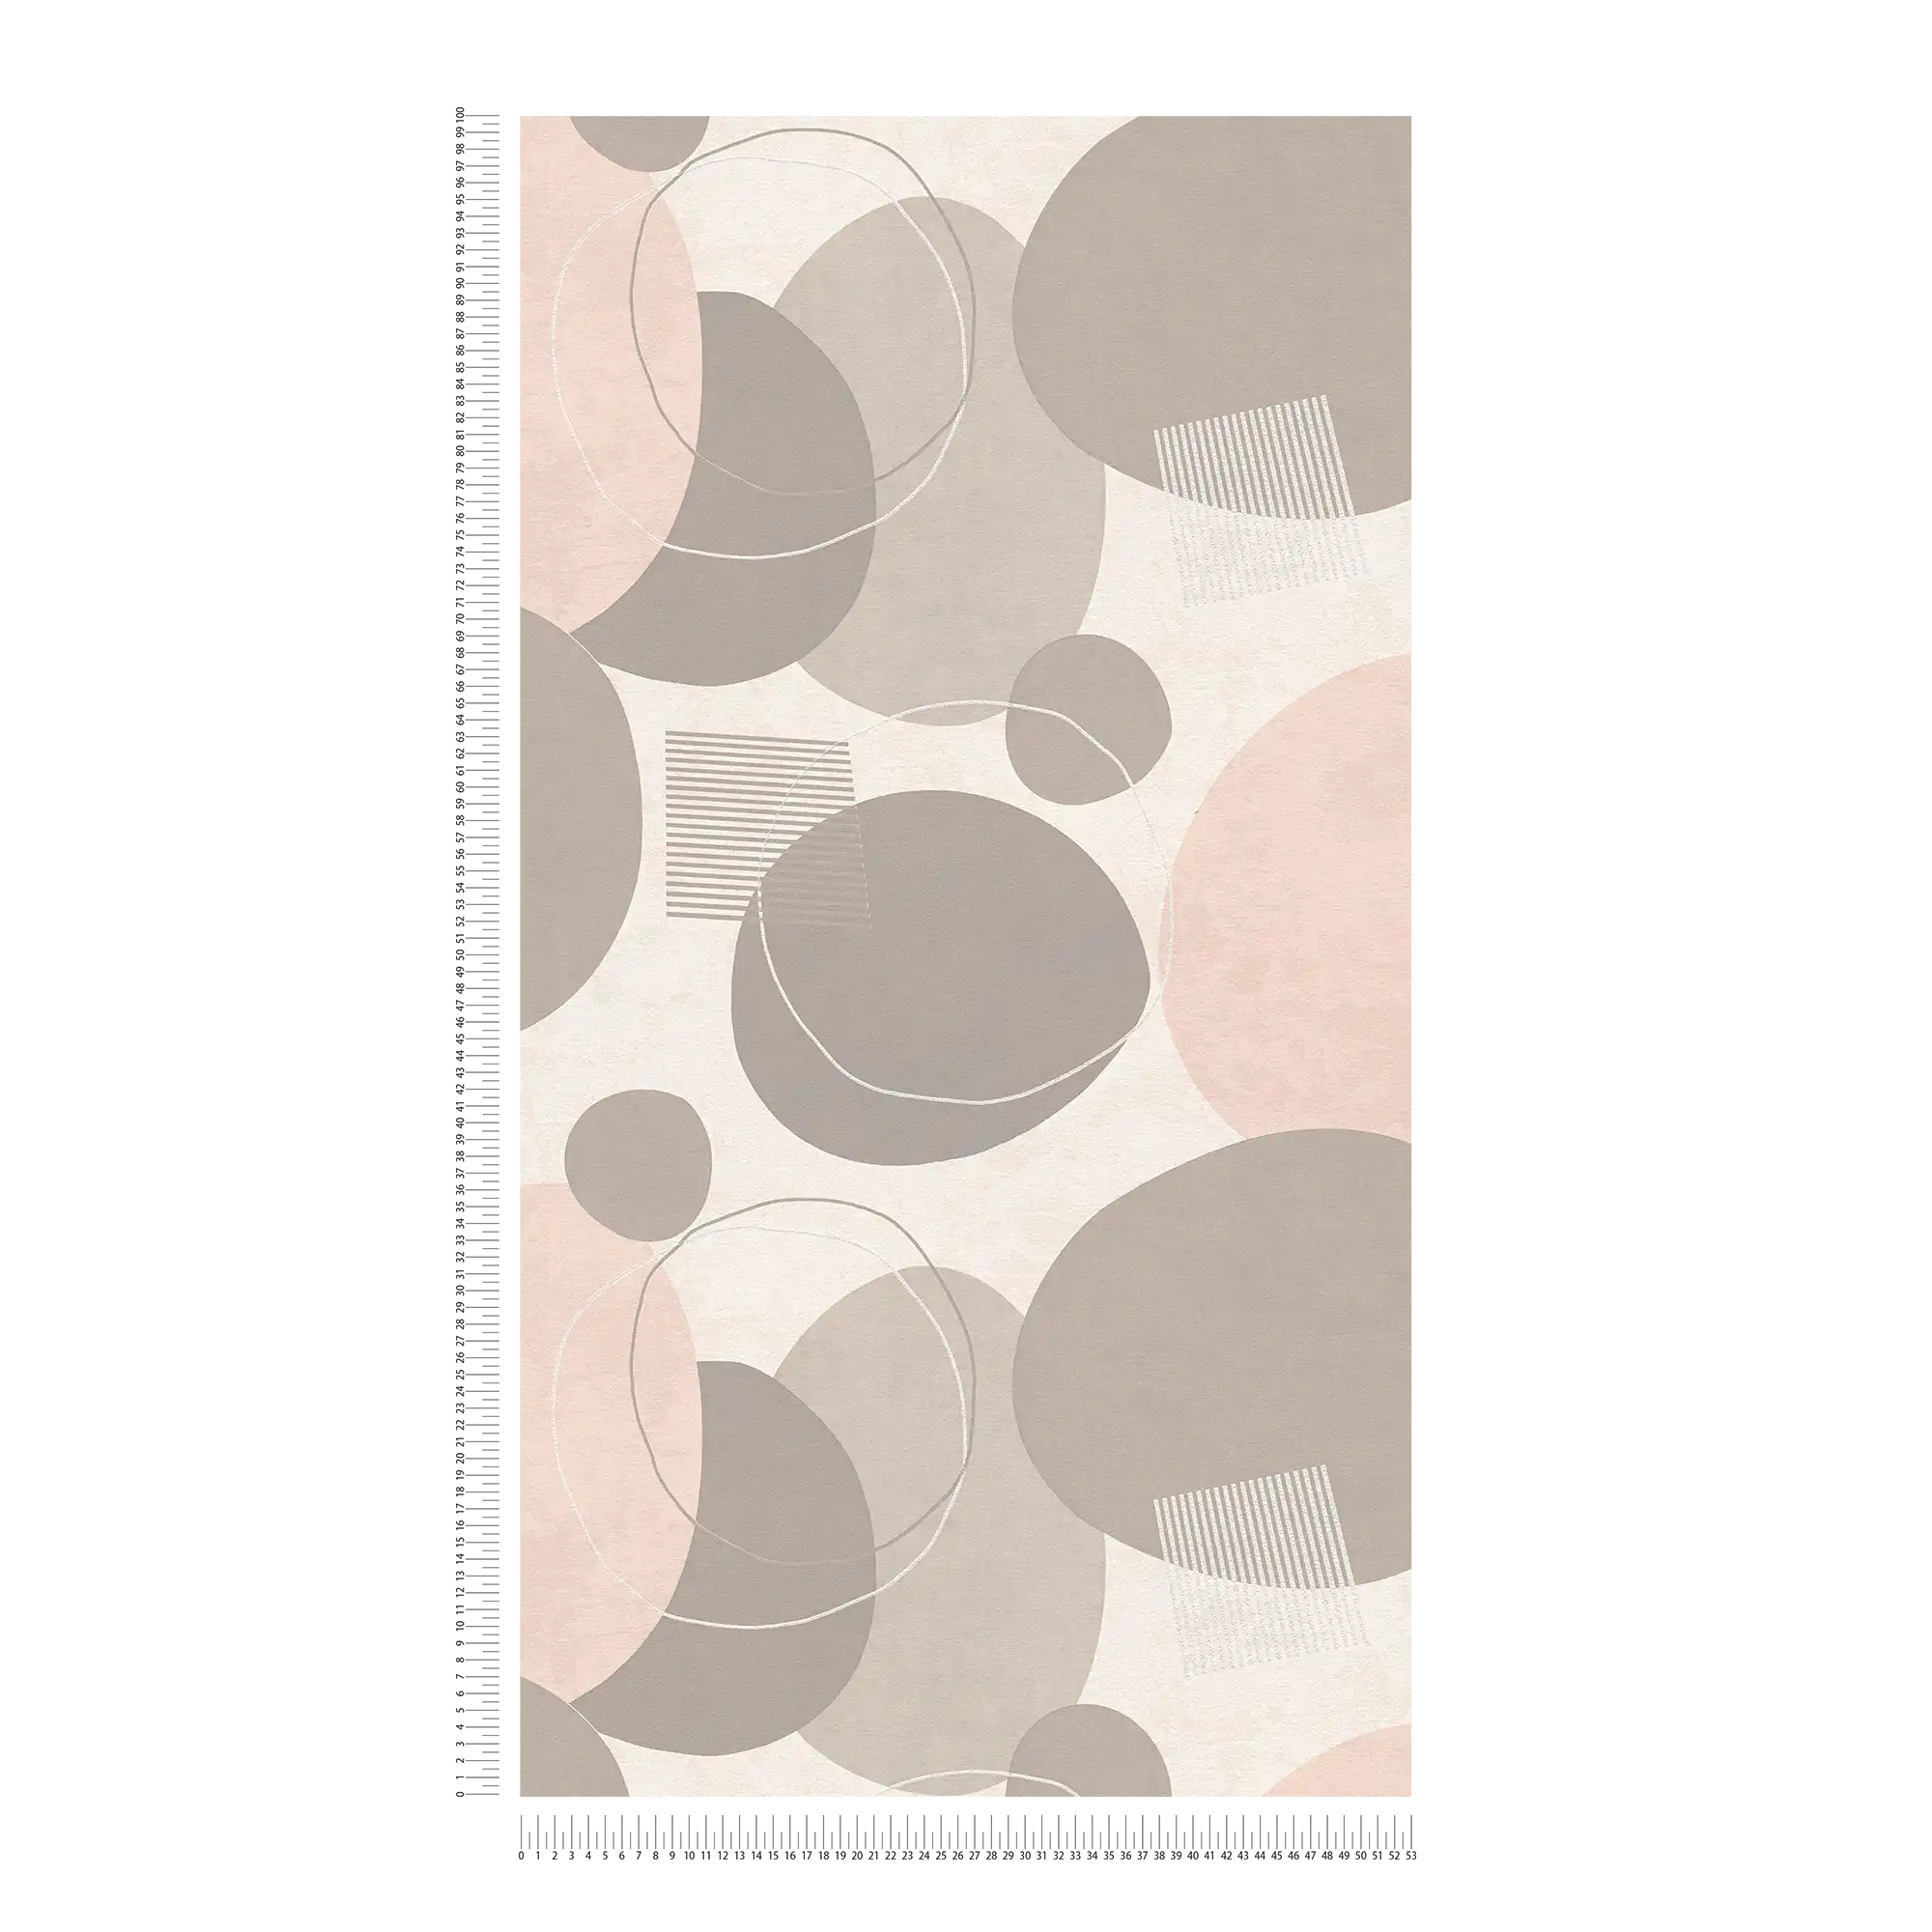             Retro Tapete Mid Century Modern Muster – Beige, Rosa, Creme
        